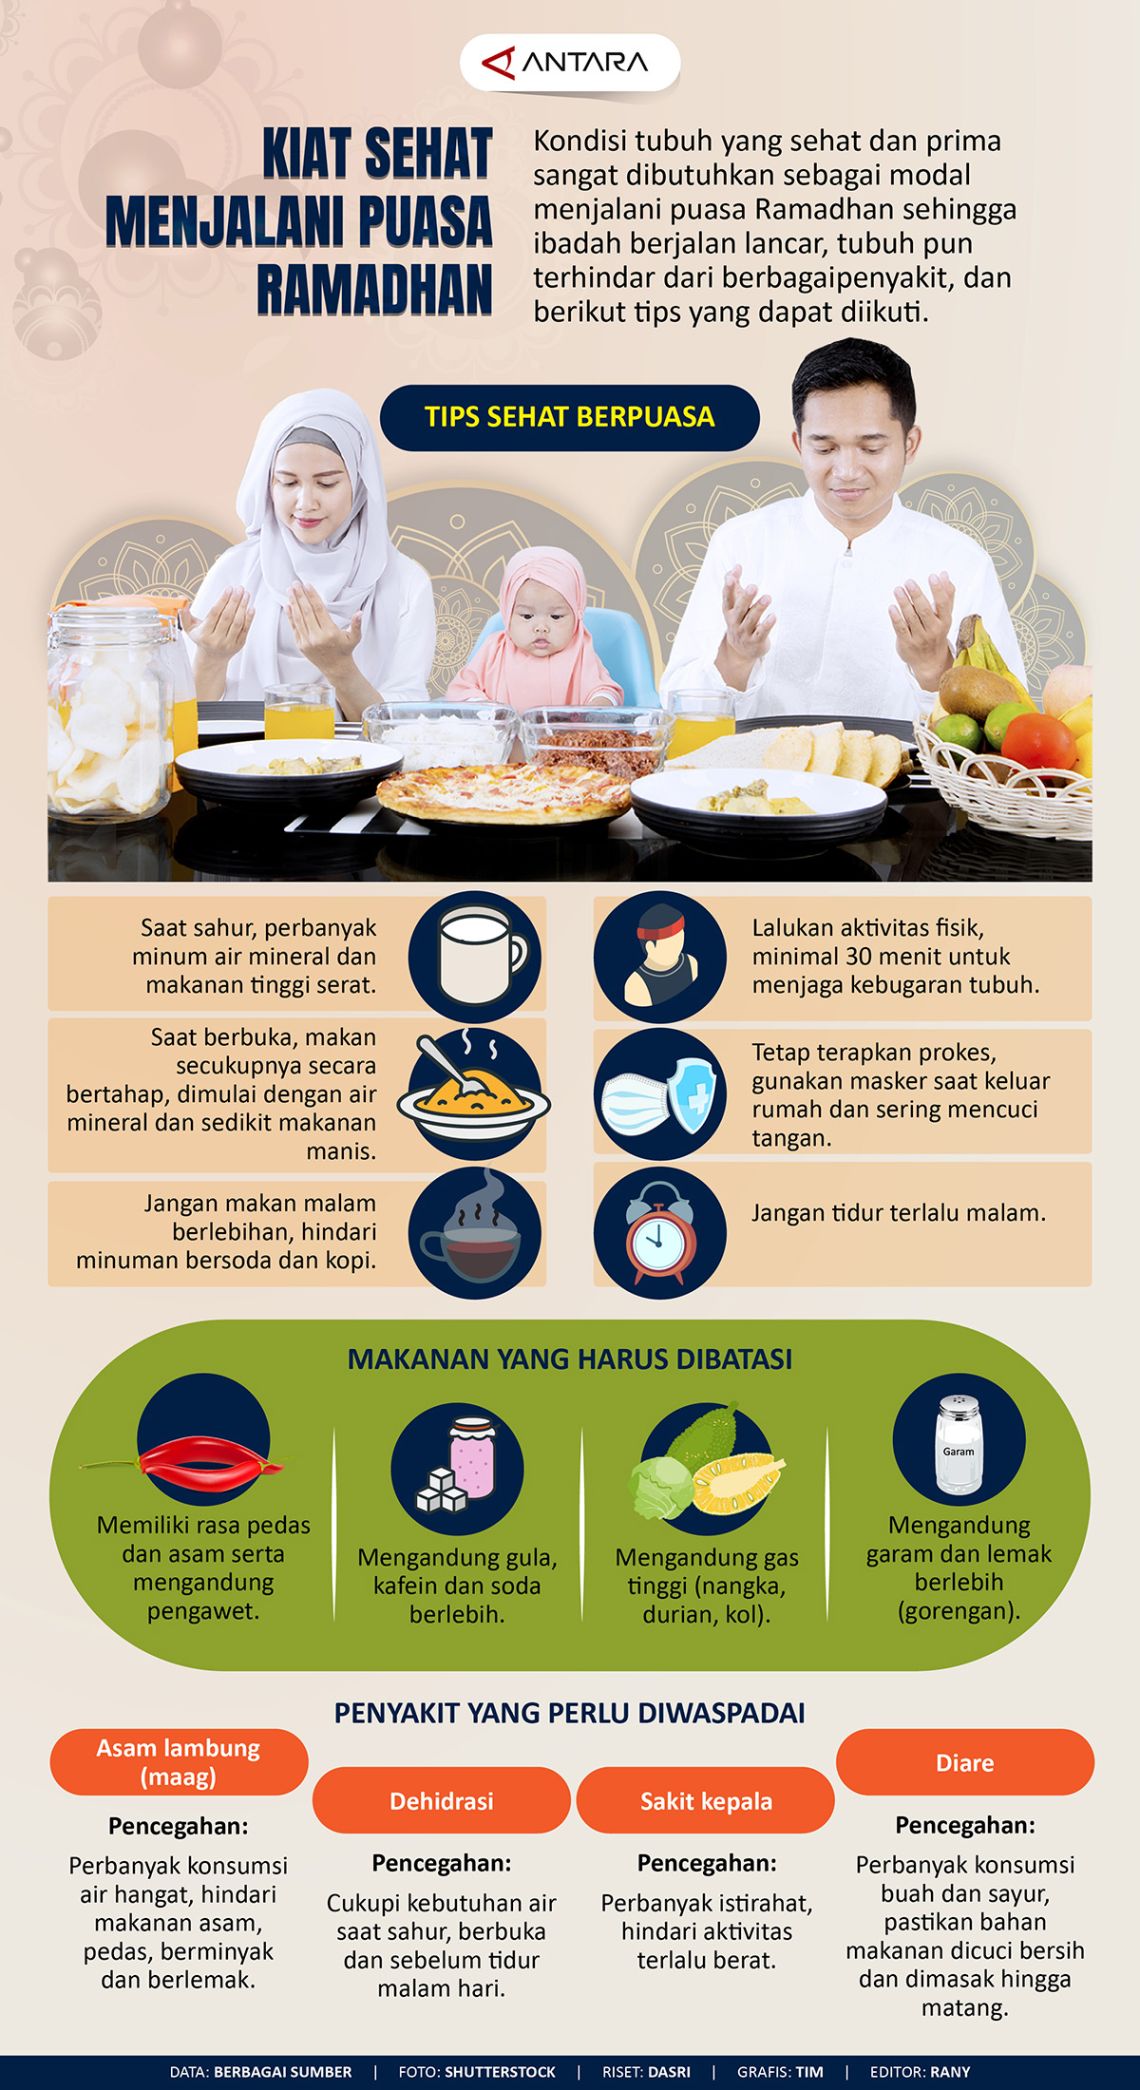 Kiat sehat menjalani puasa Ramadhan